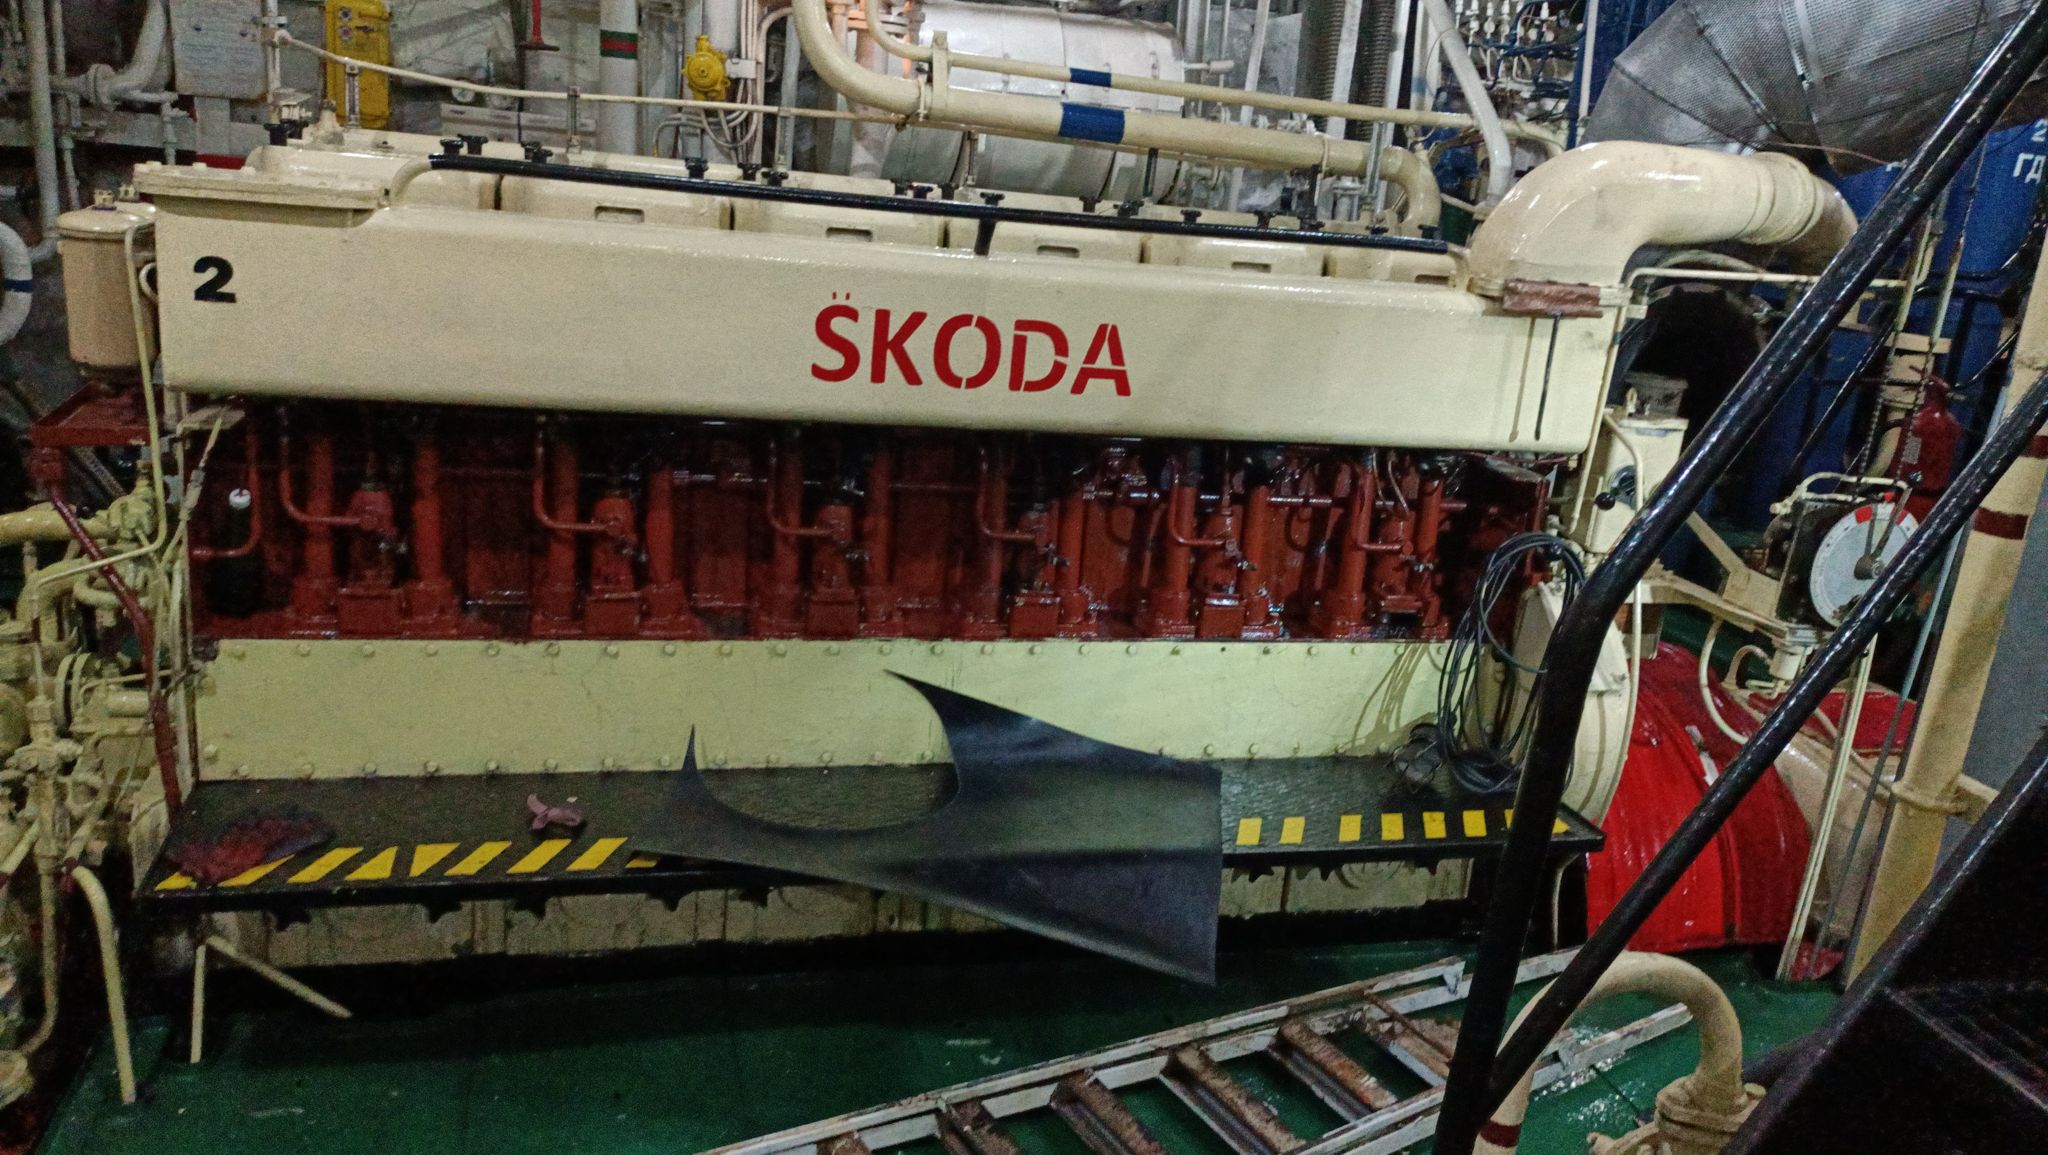 Overhaul / Skoda 6-275 Main Engine and Skoda 6S160 / Vessel VERLAINE 